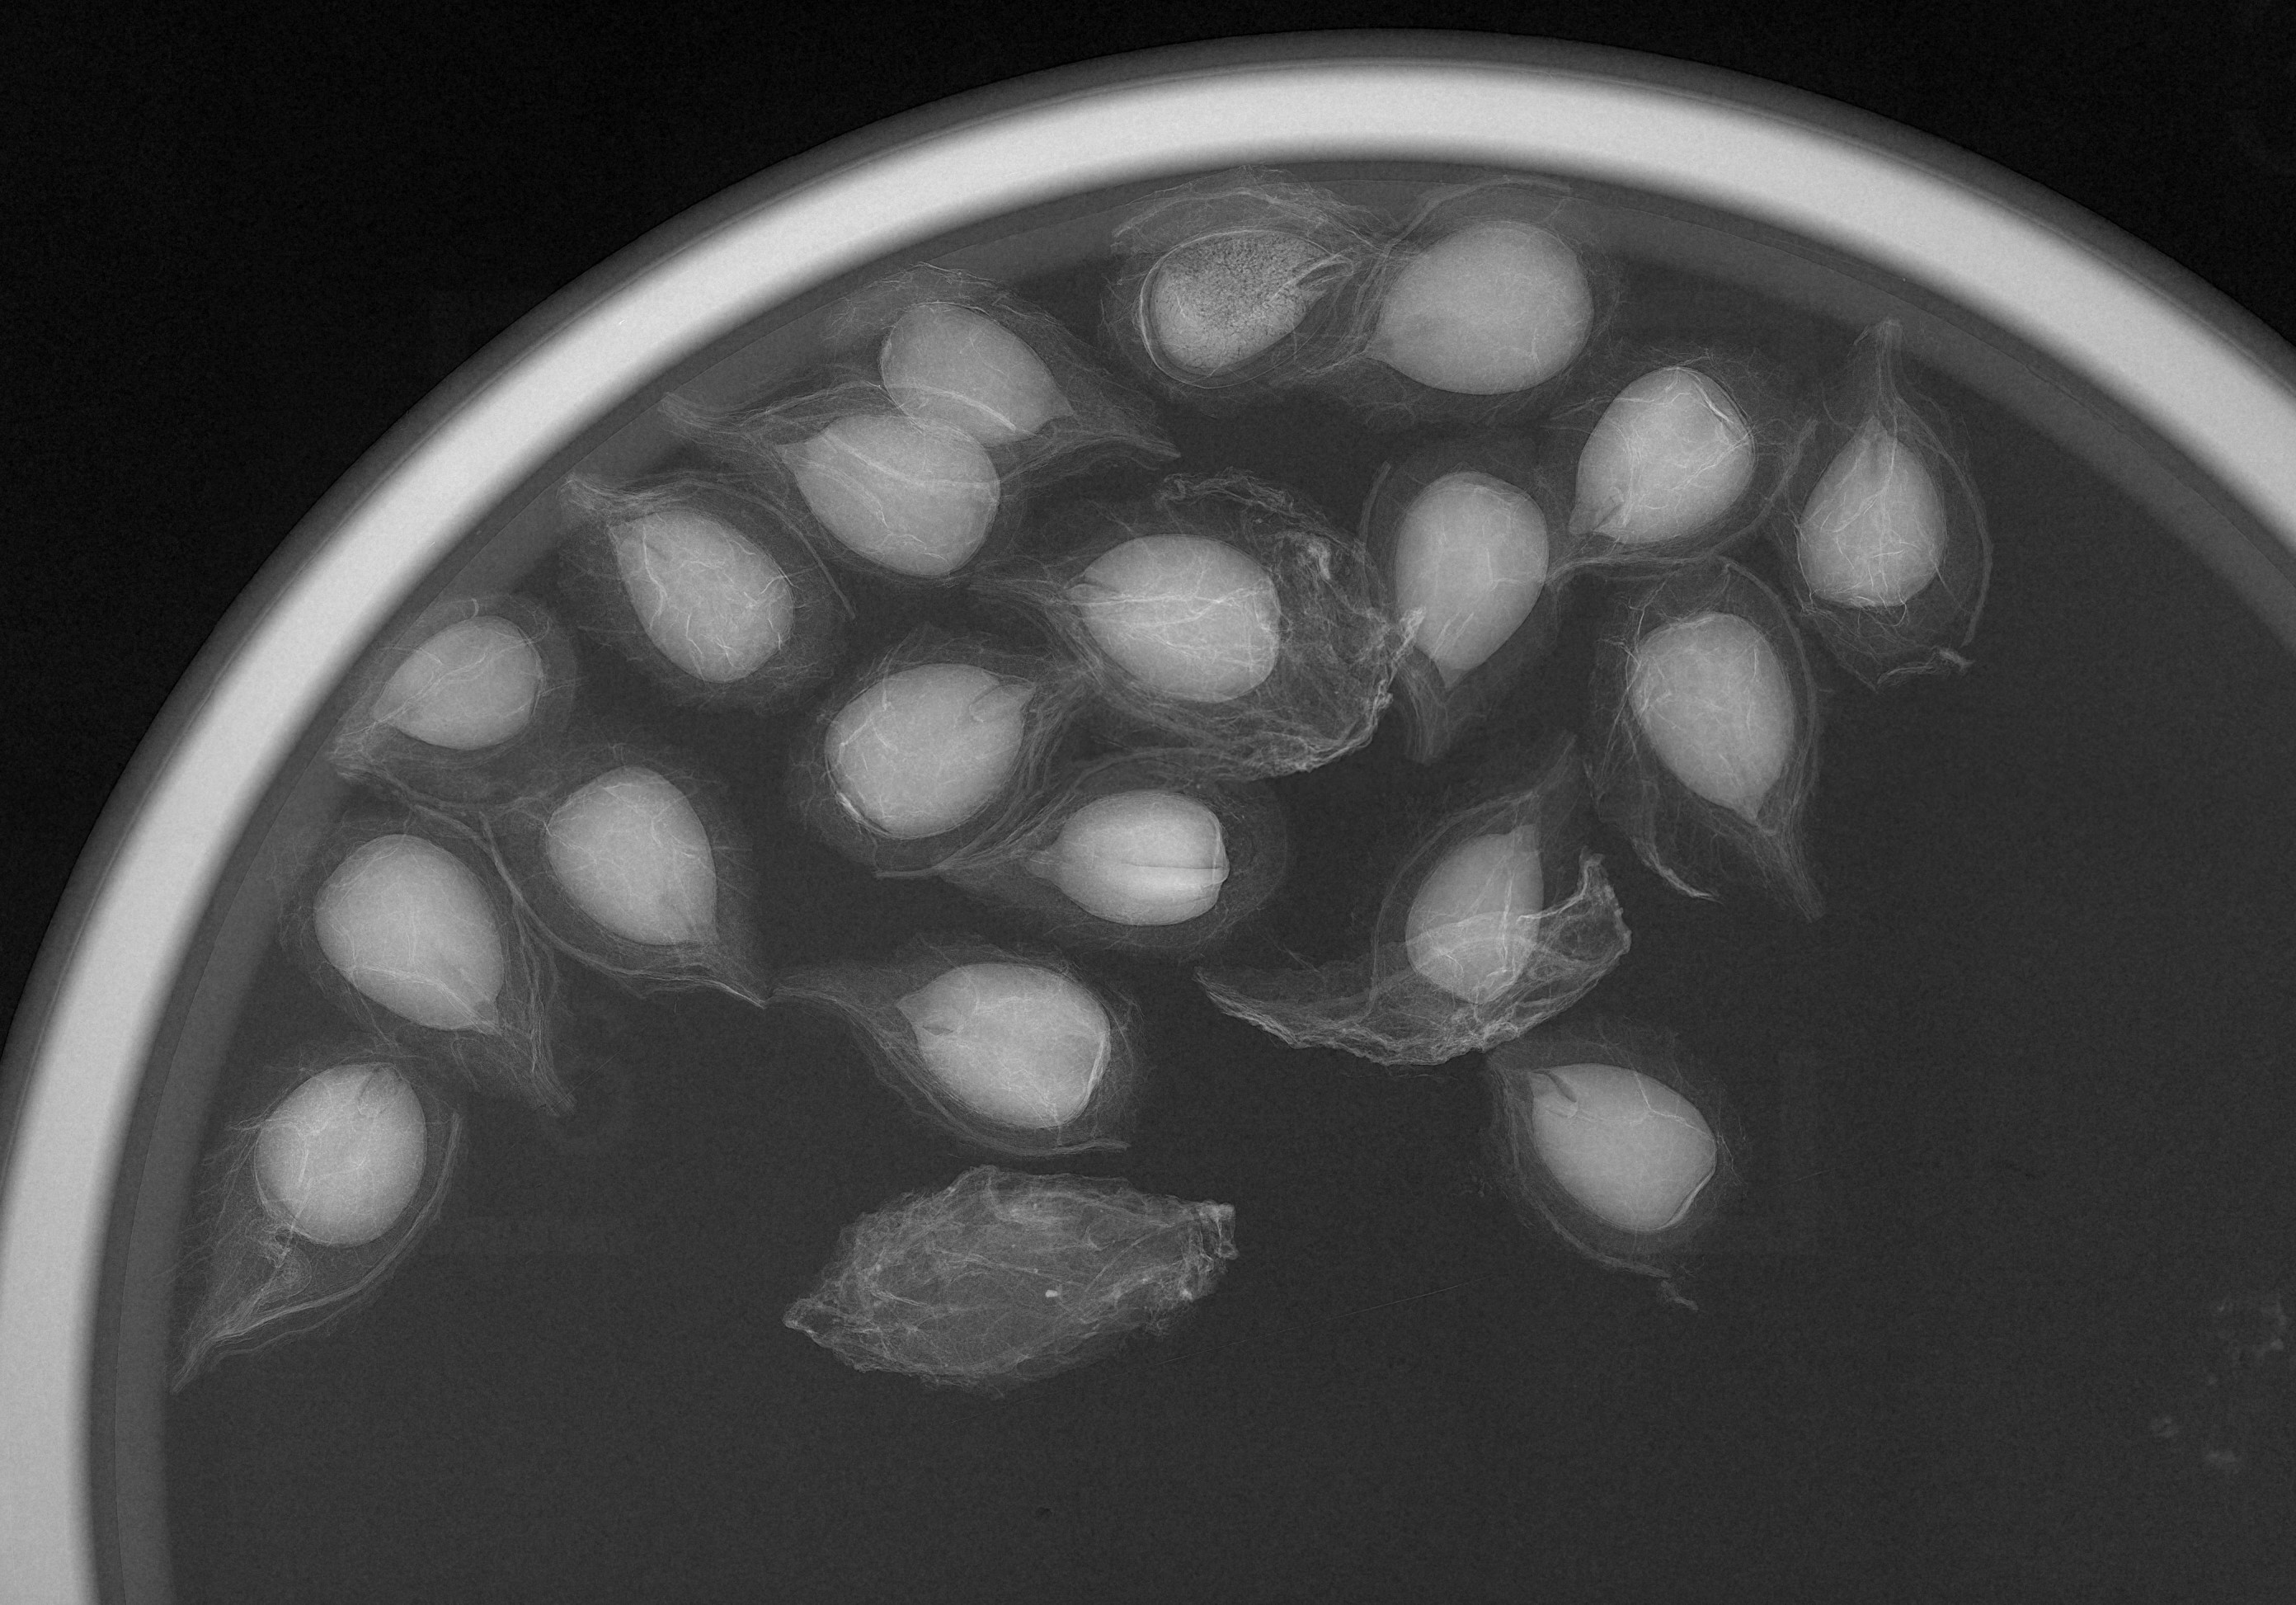  X-ray of Wych elm seeds